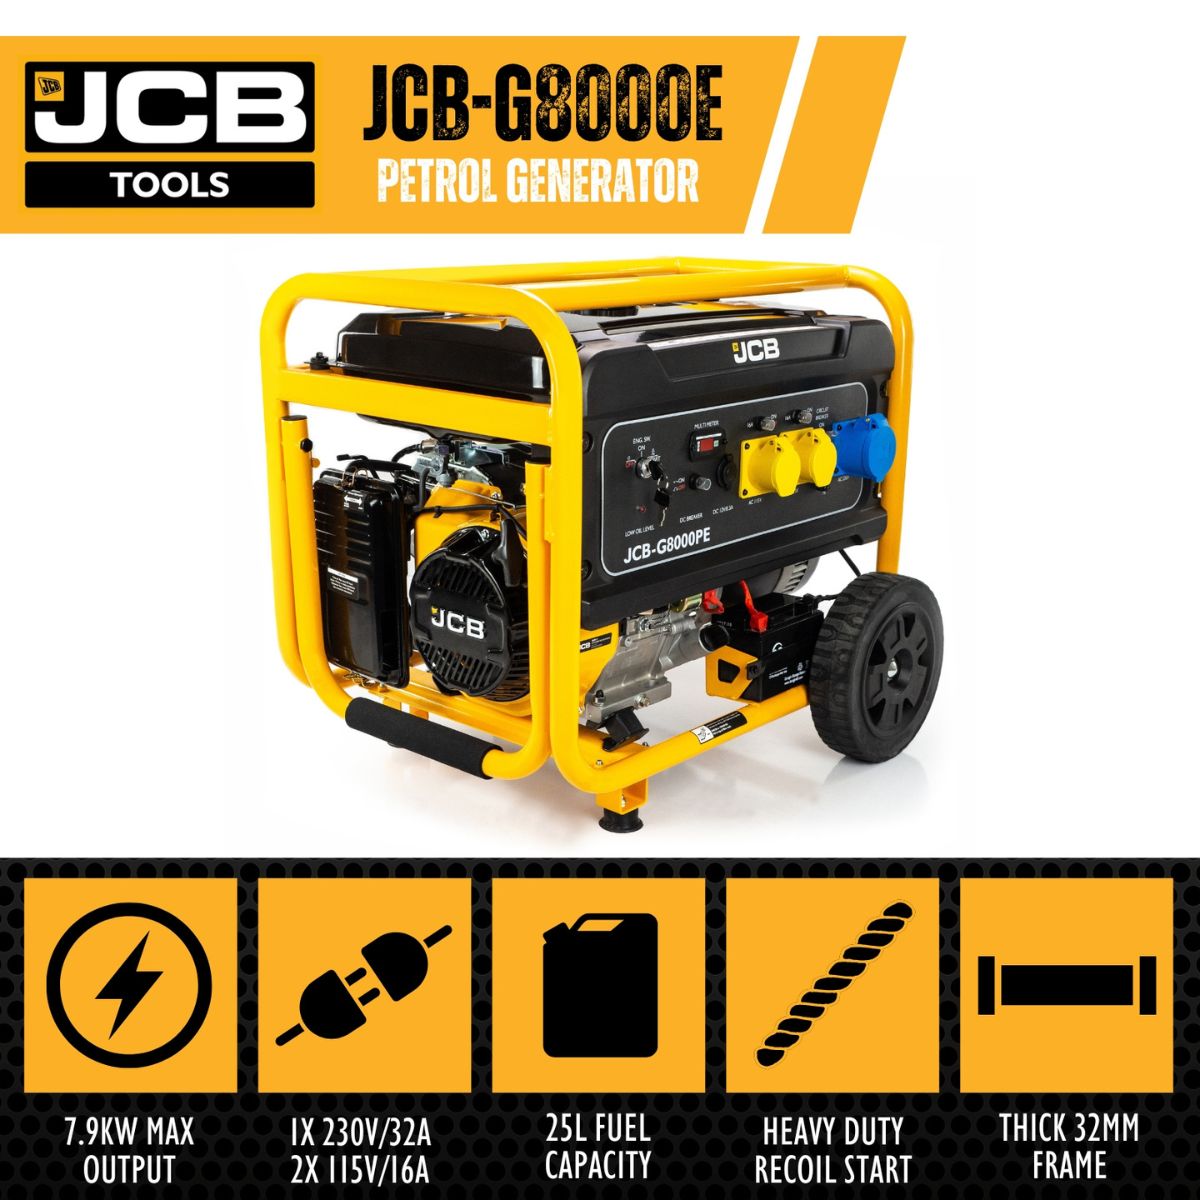 JCB G8000PE Electric Start Petrol Site Generator 457cc 115V/230V